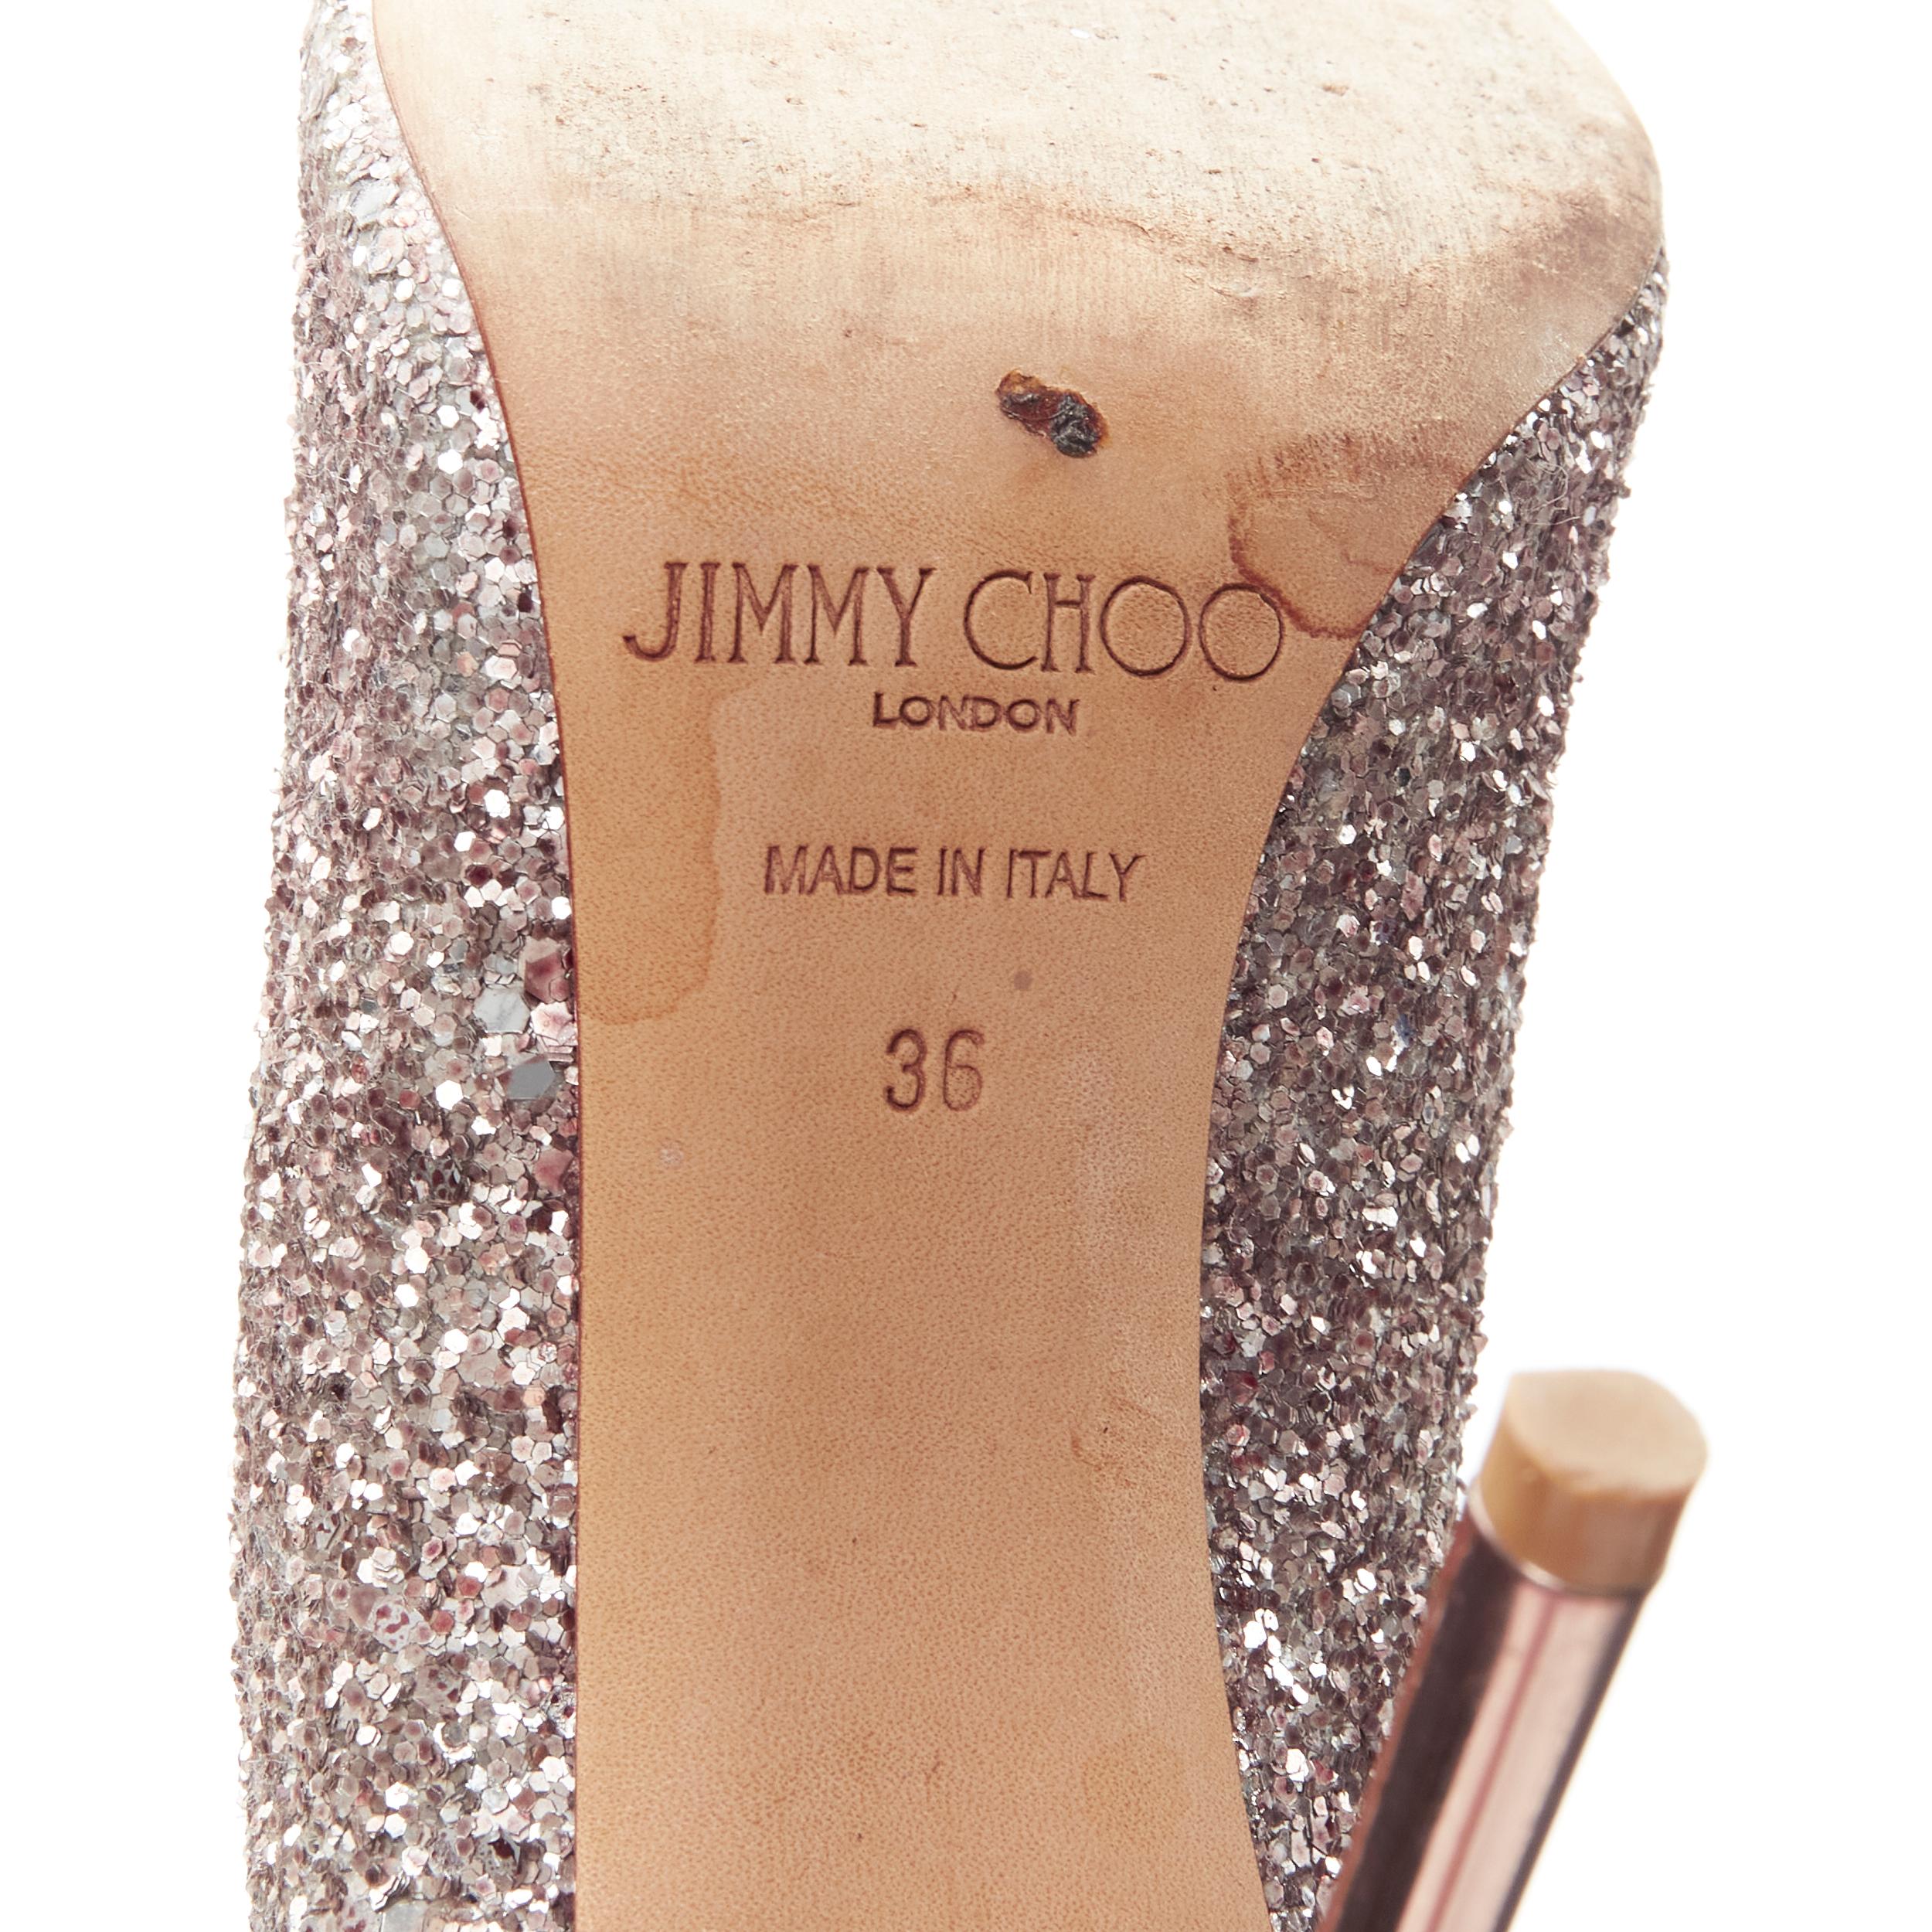 JIMMY CHOO rose gold course glitter covered metal heel pigalle pump EU36 2